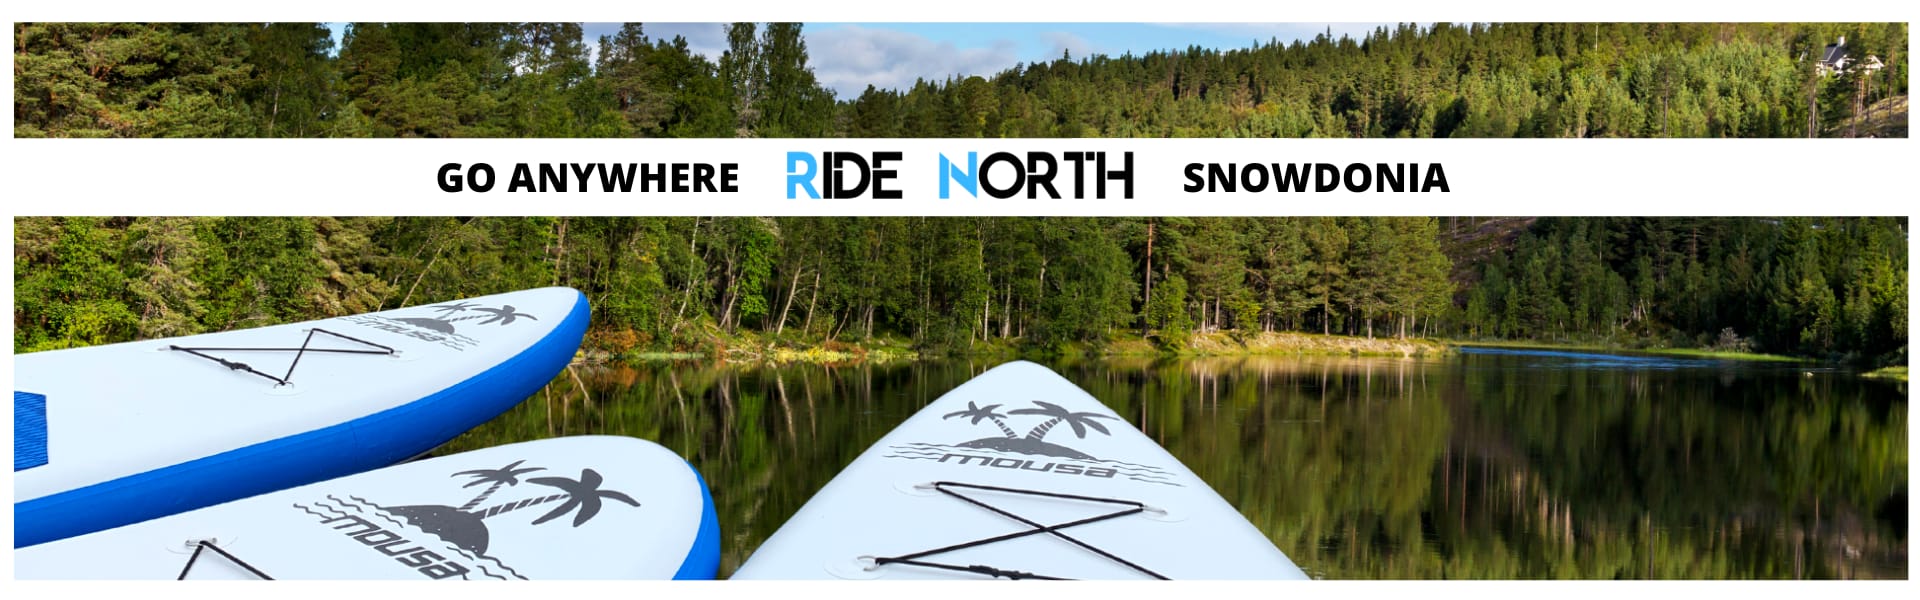 Ride North